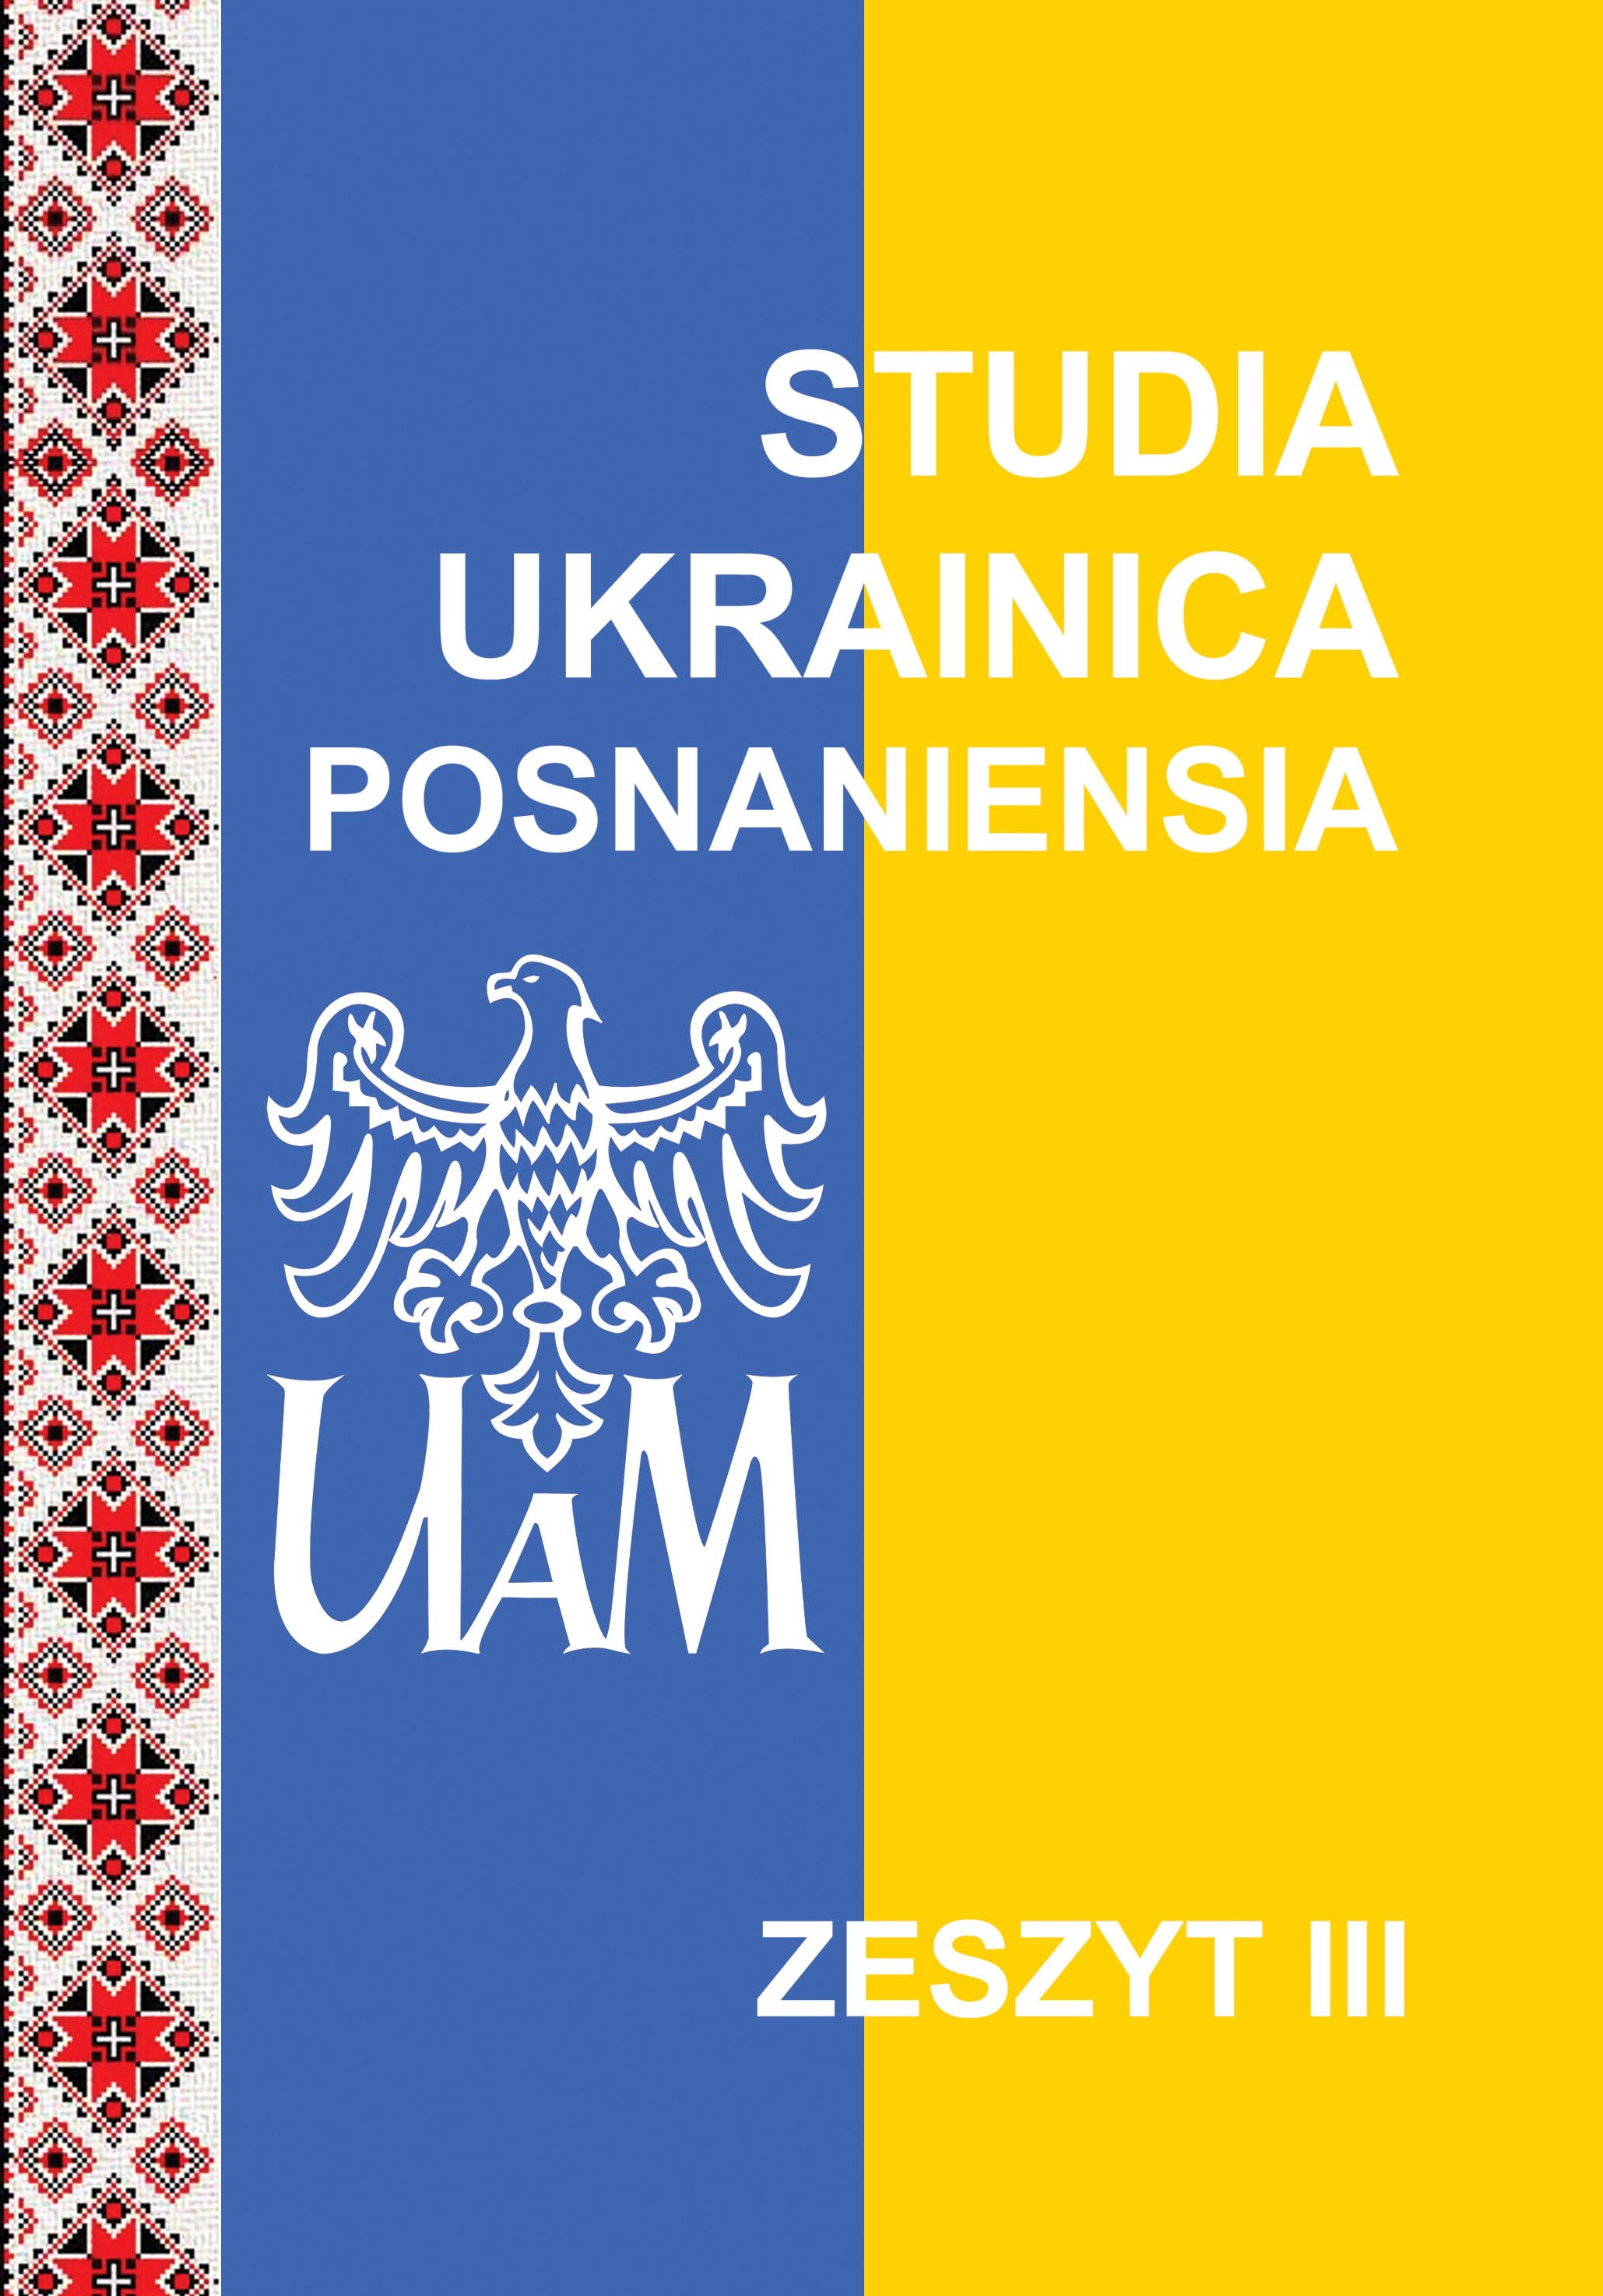 LANGUAGE PLAY IN ENGLISH-UKRAINIAN FICTION TRANSLATION Cover Image